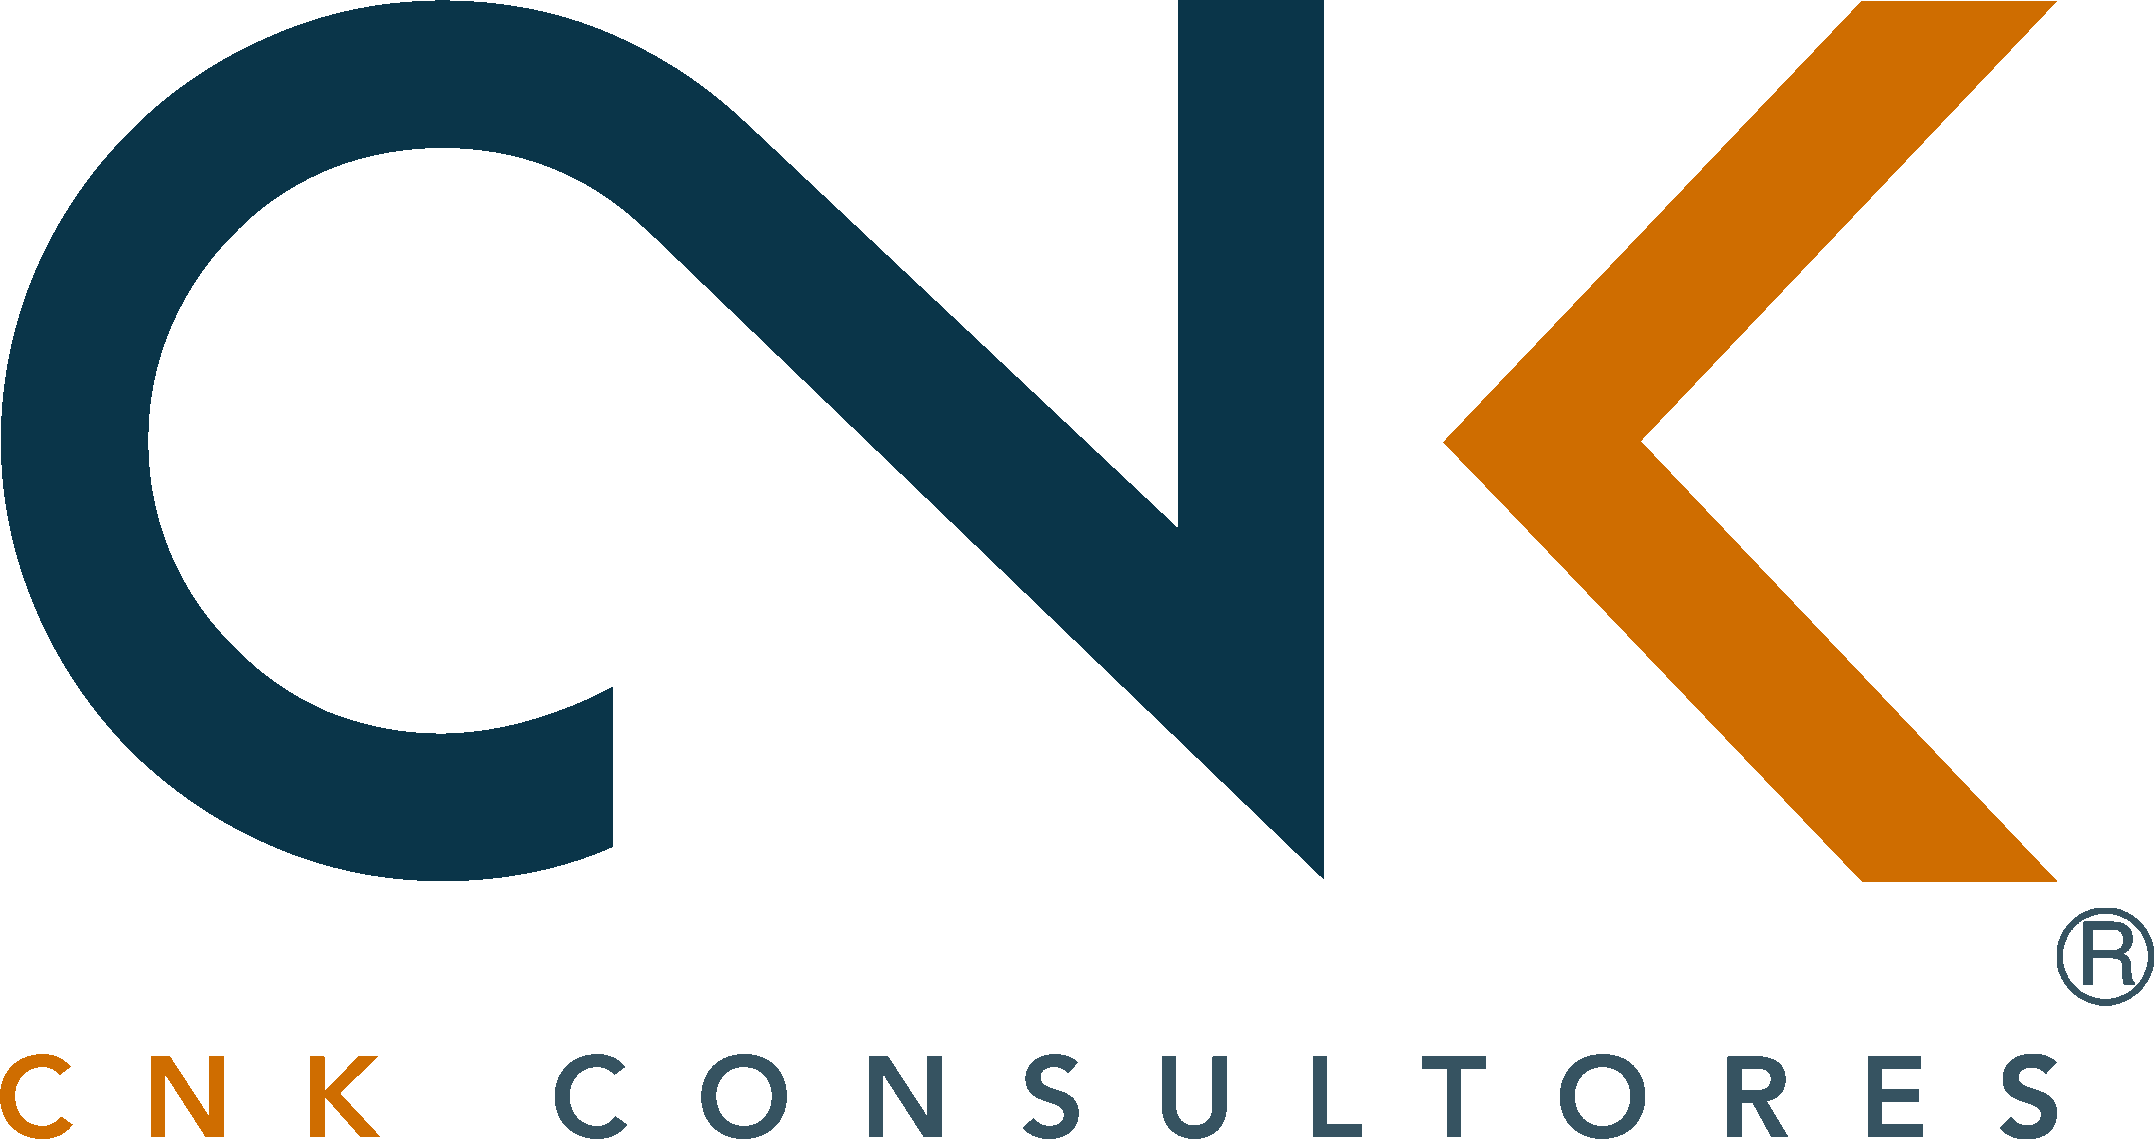 Cliente net2phone - CNK Consultores - 